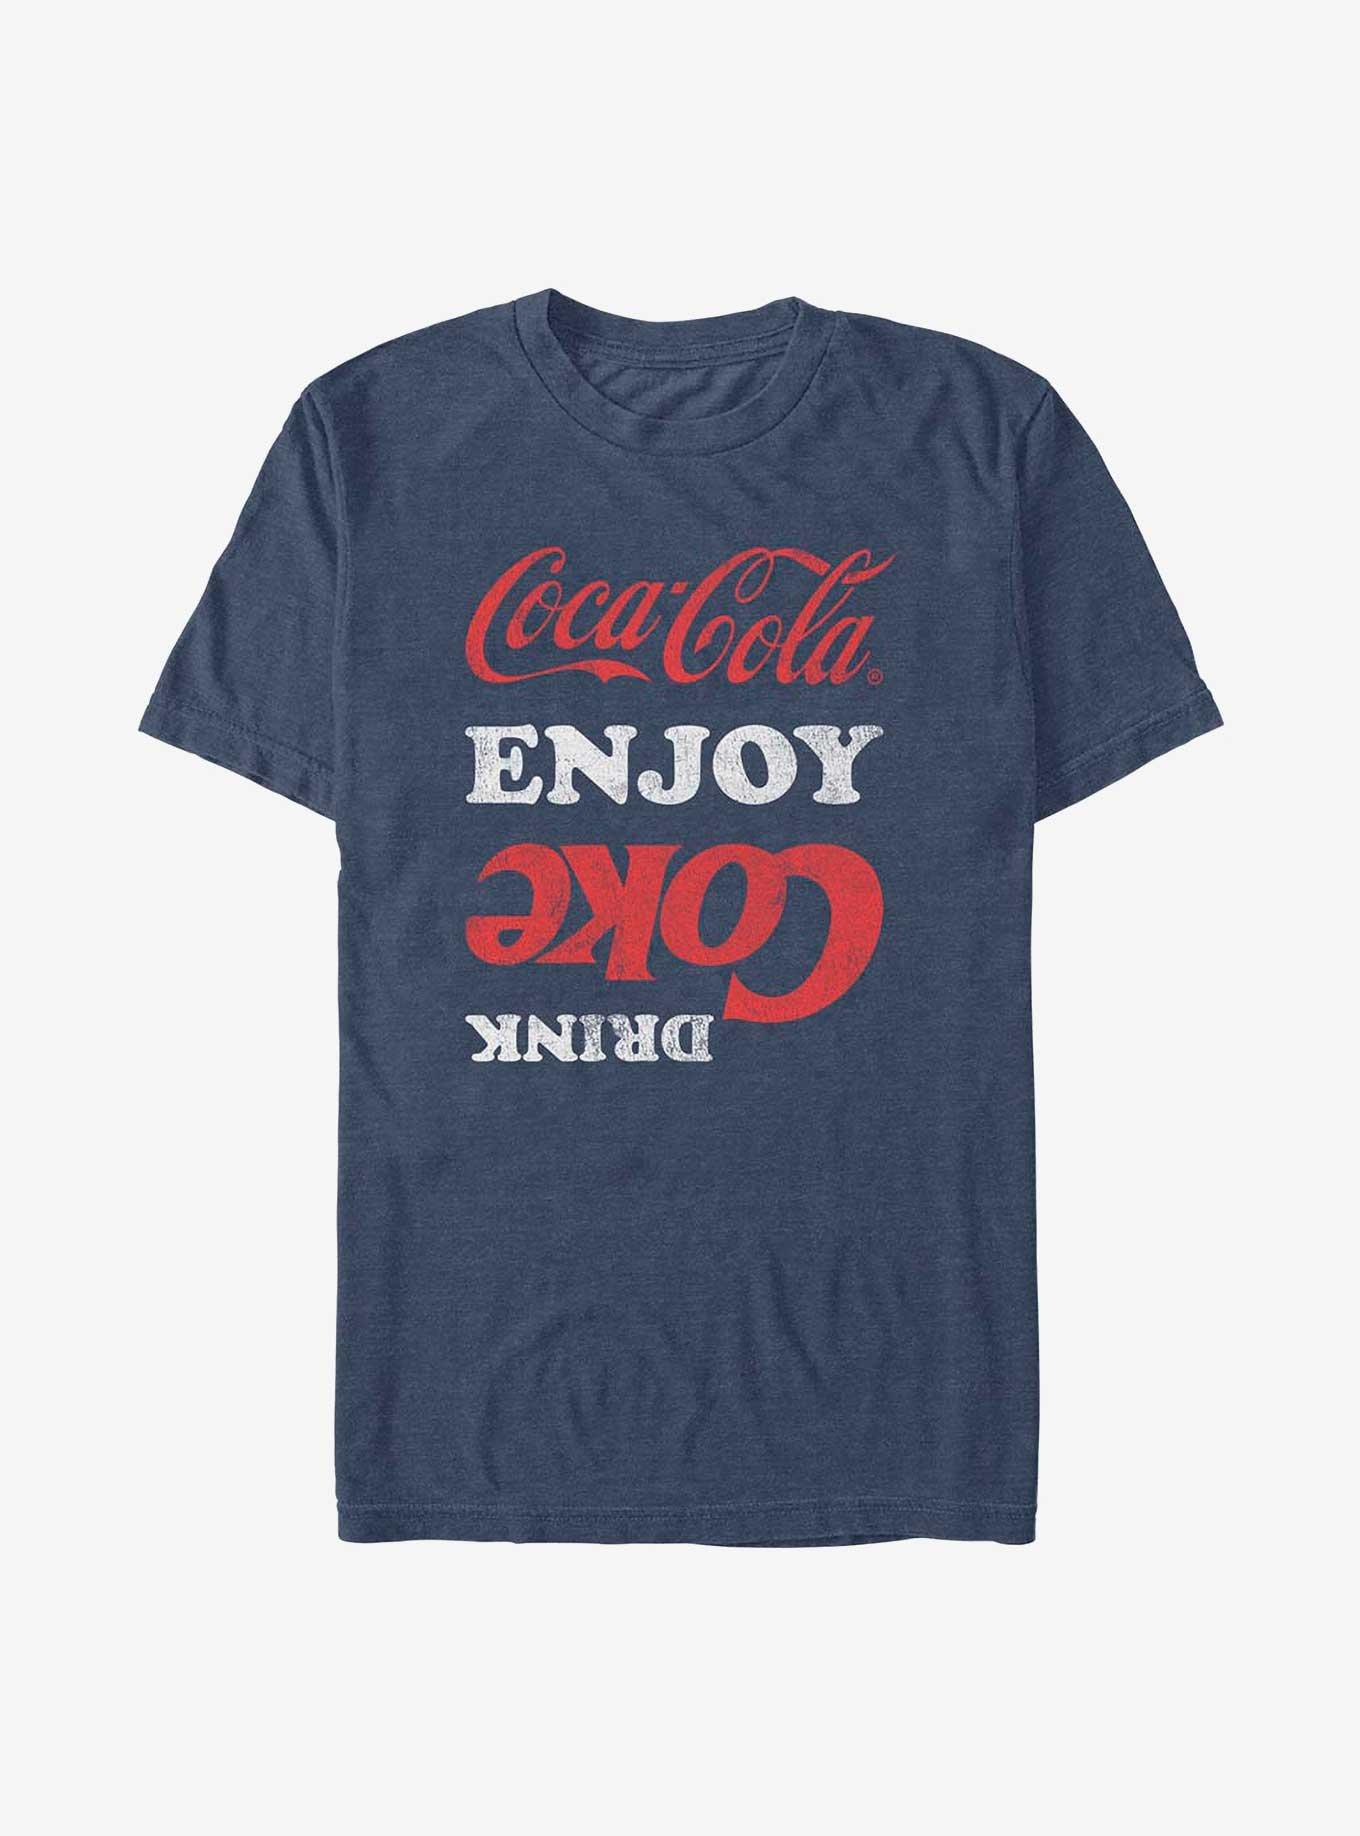 Coca-Cola Drink Enjoy Cola T-Shirt